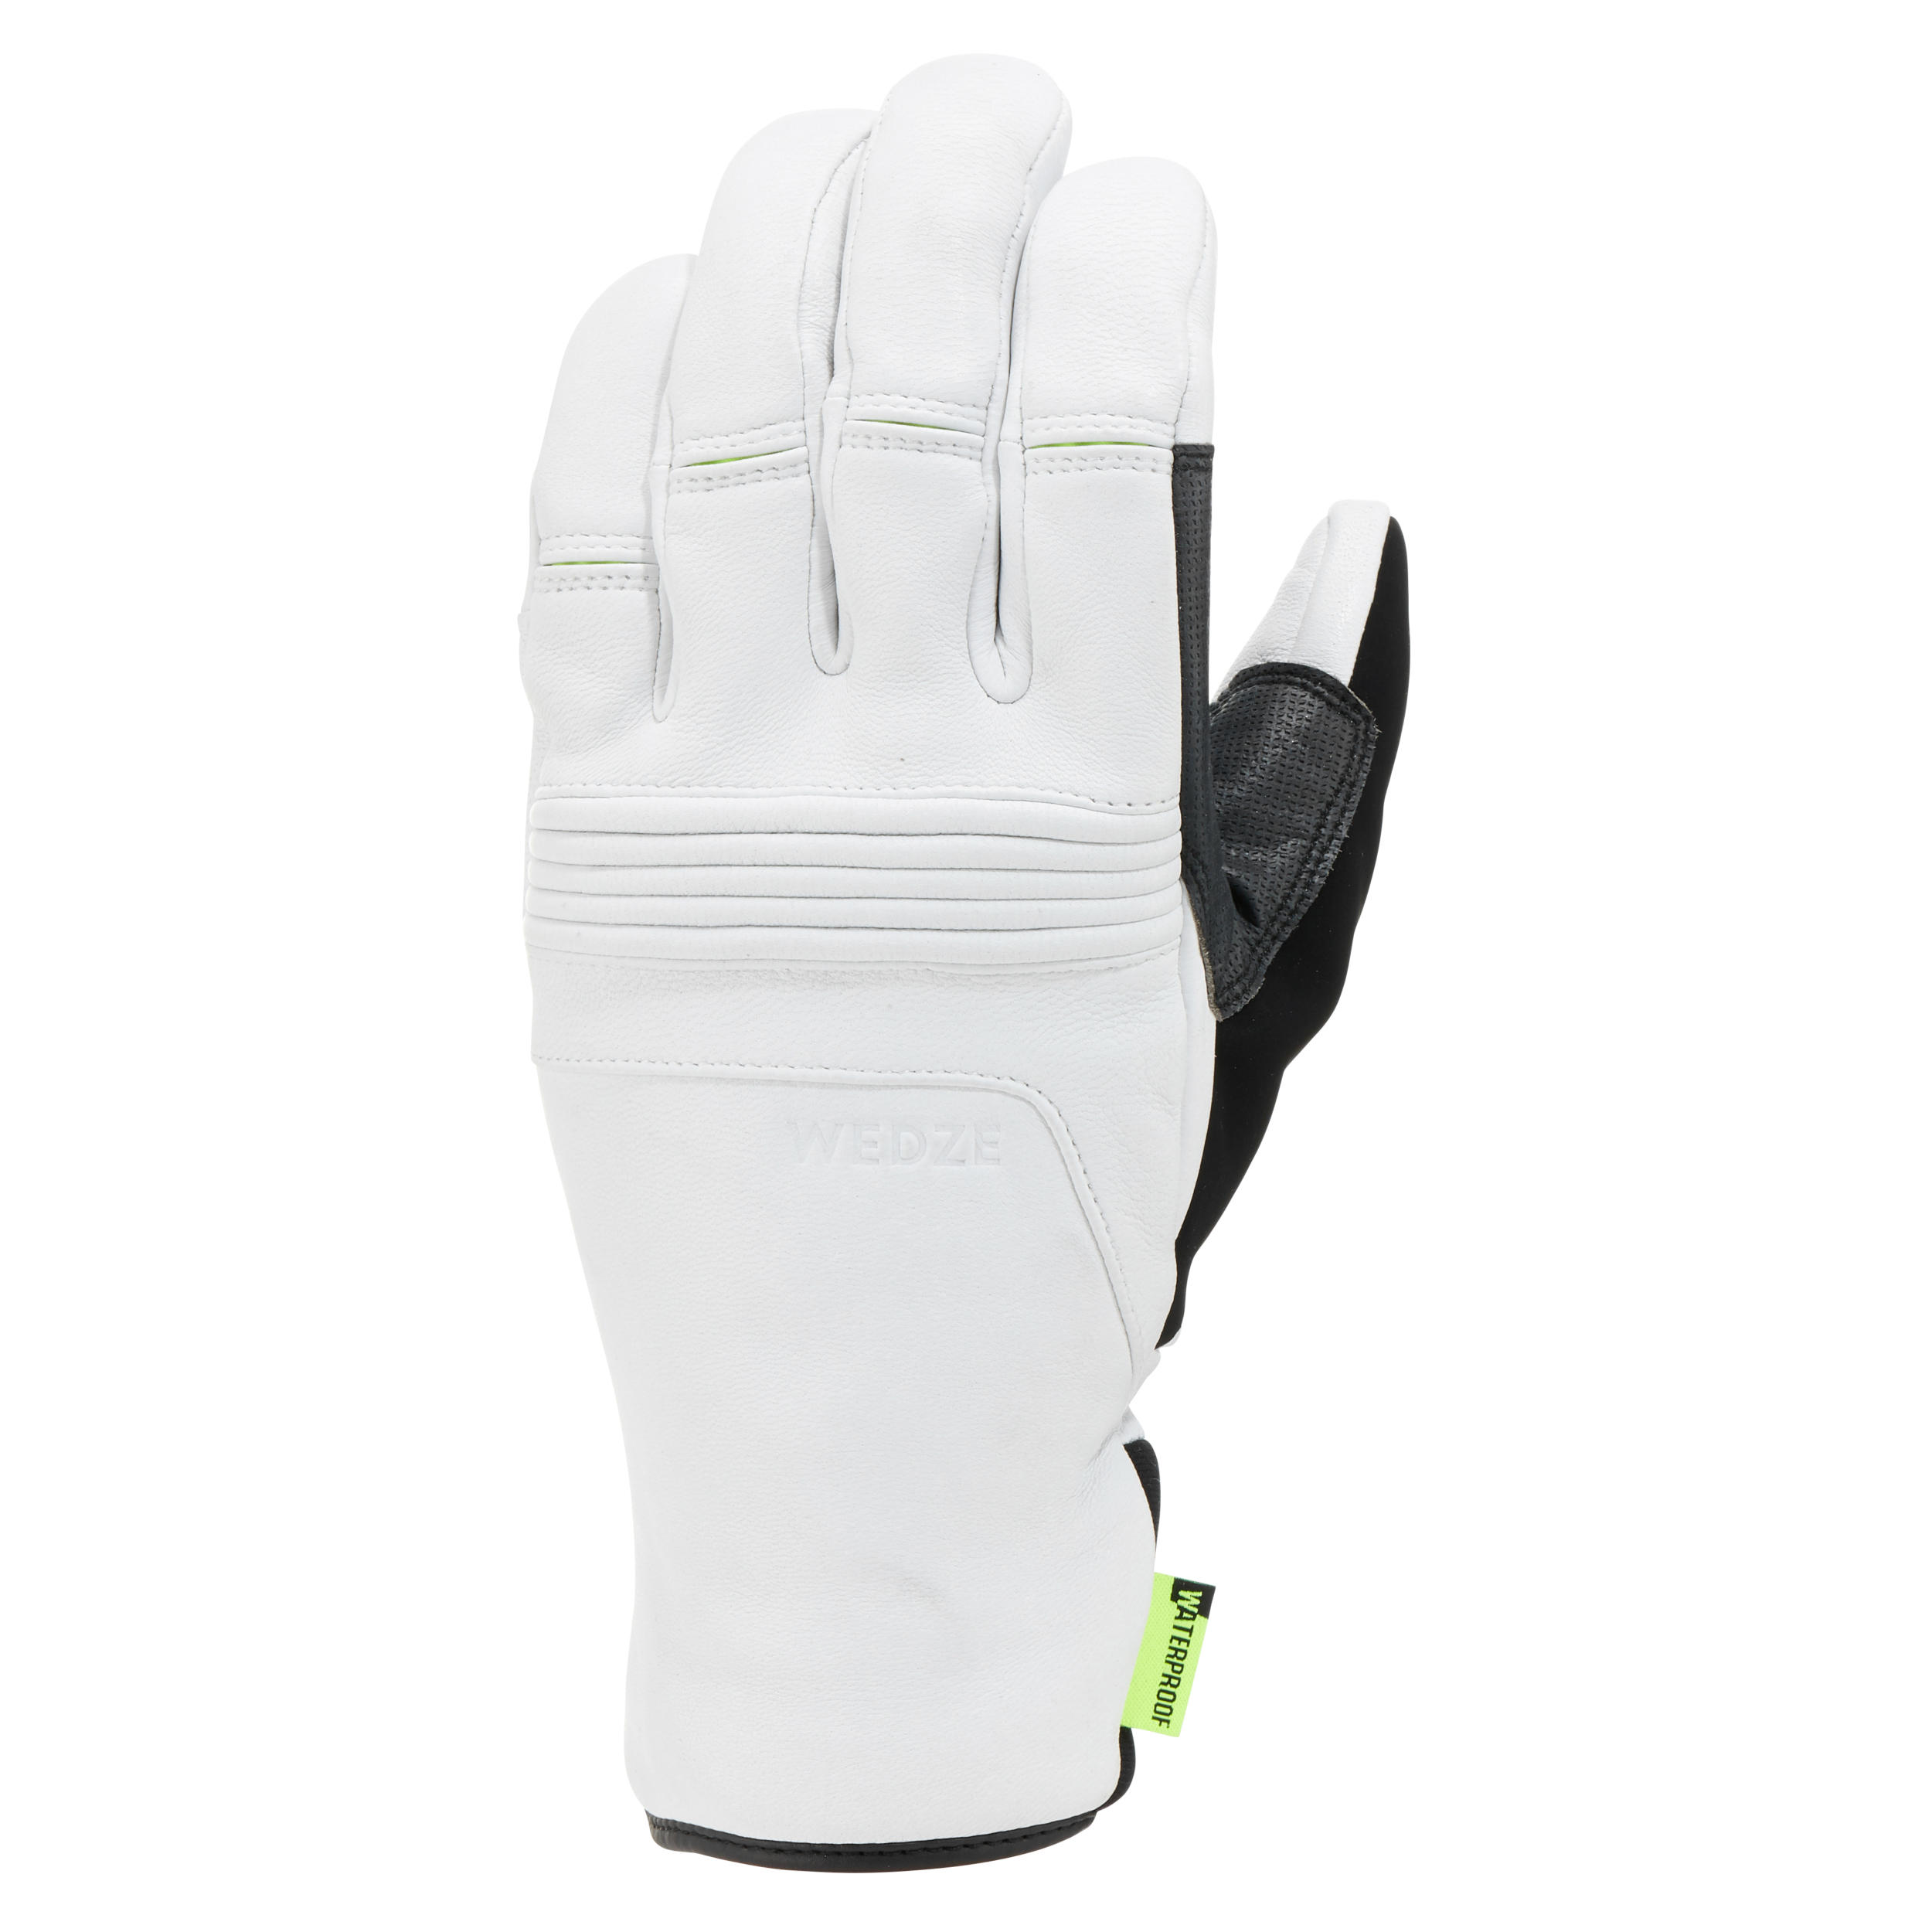 WEDZE Adults' D-Ski Gloves - White